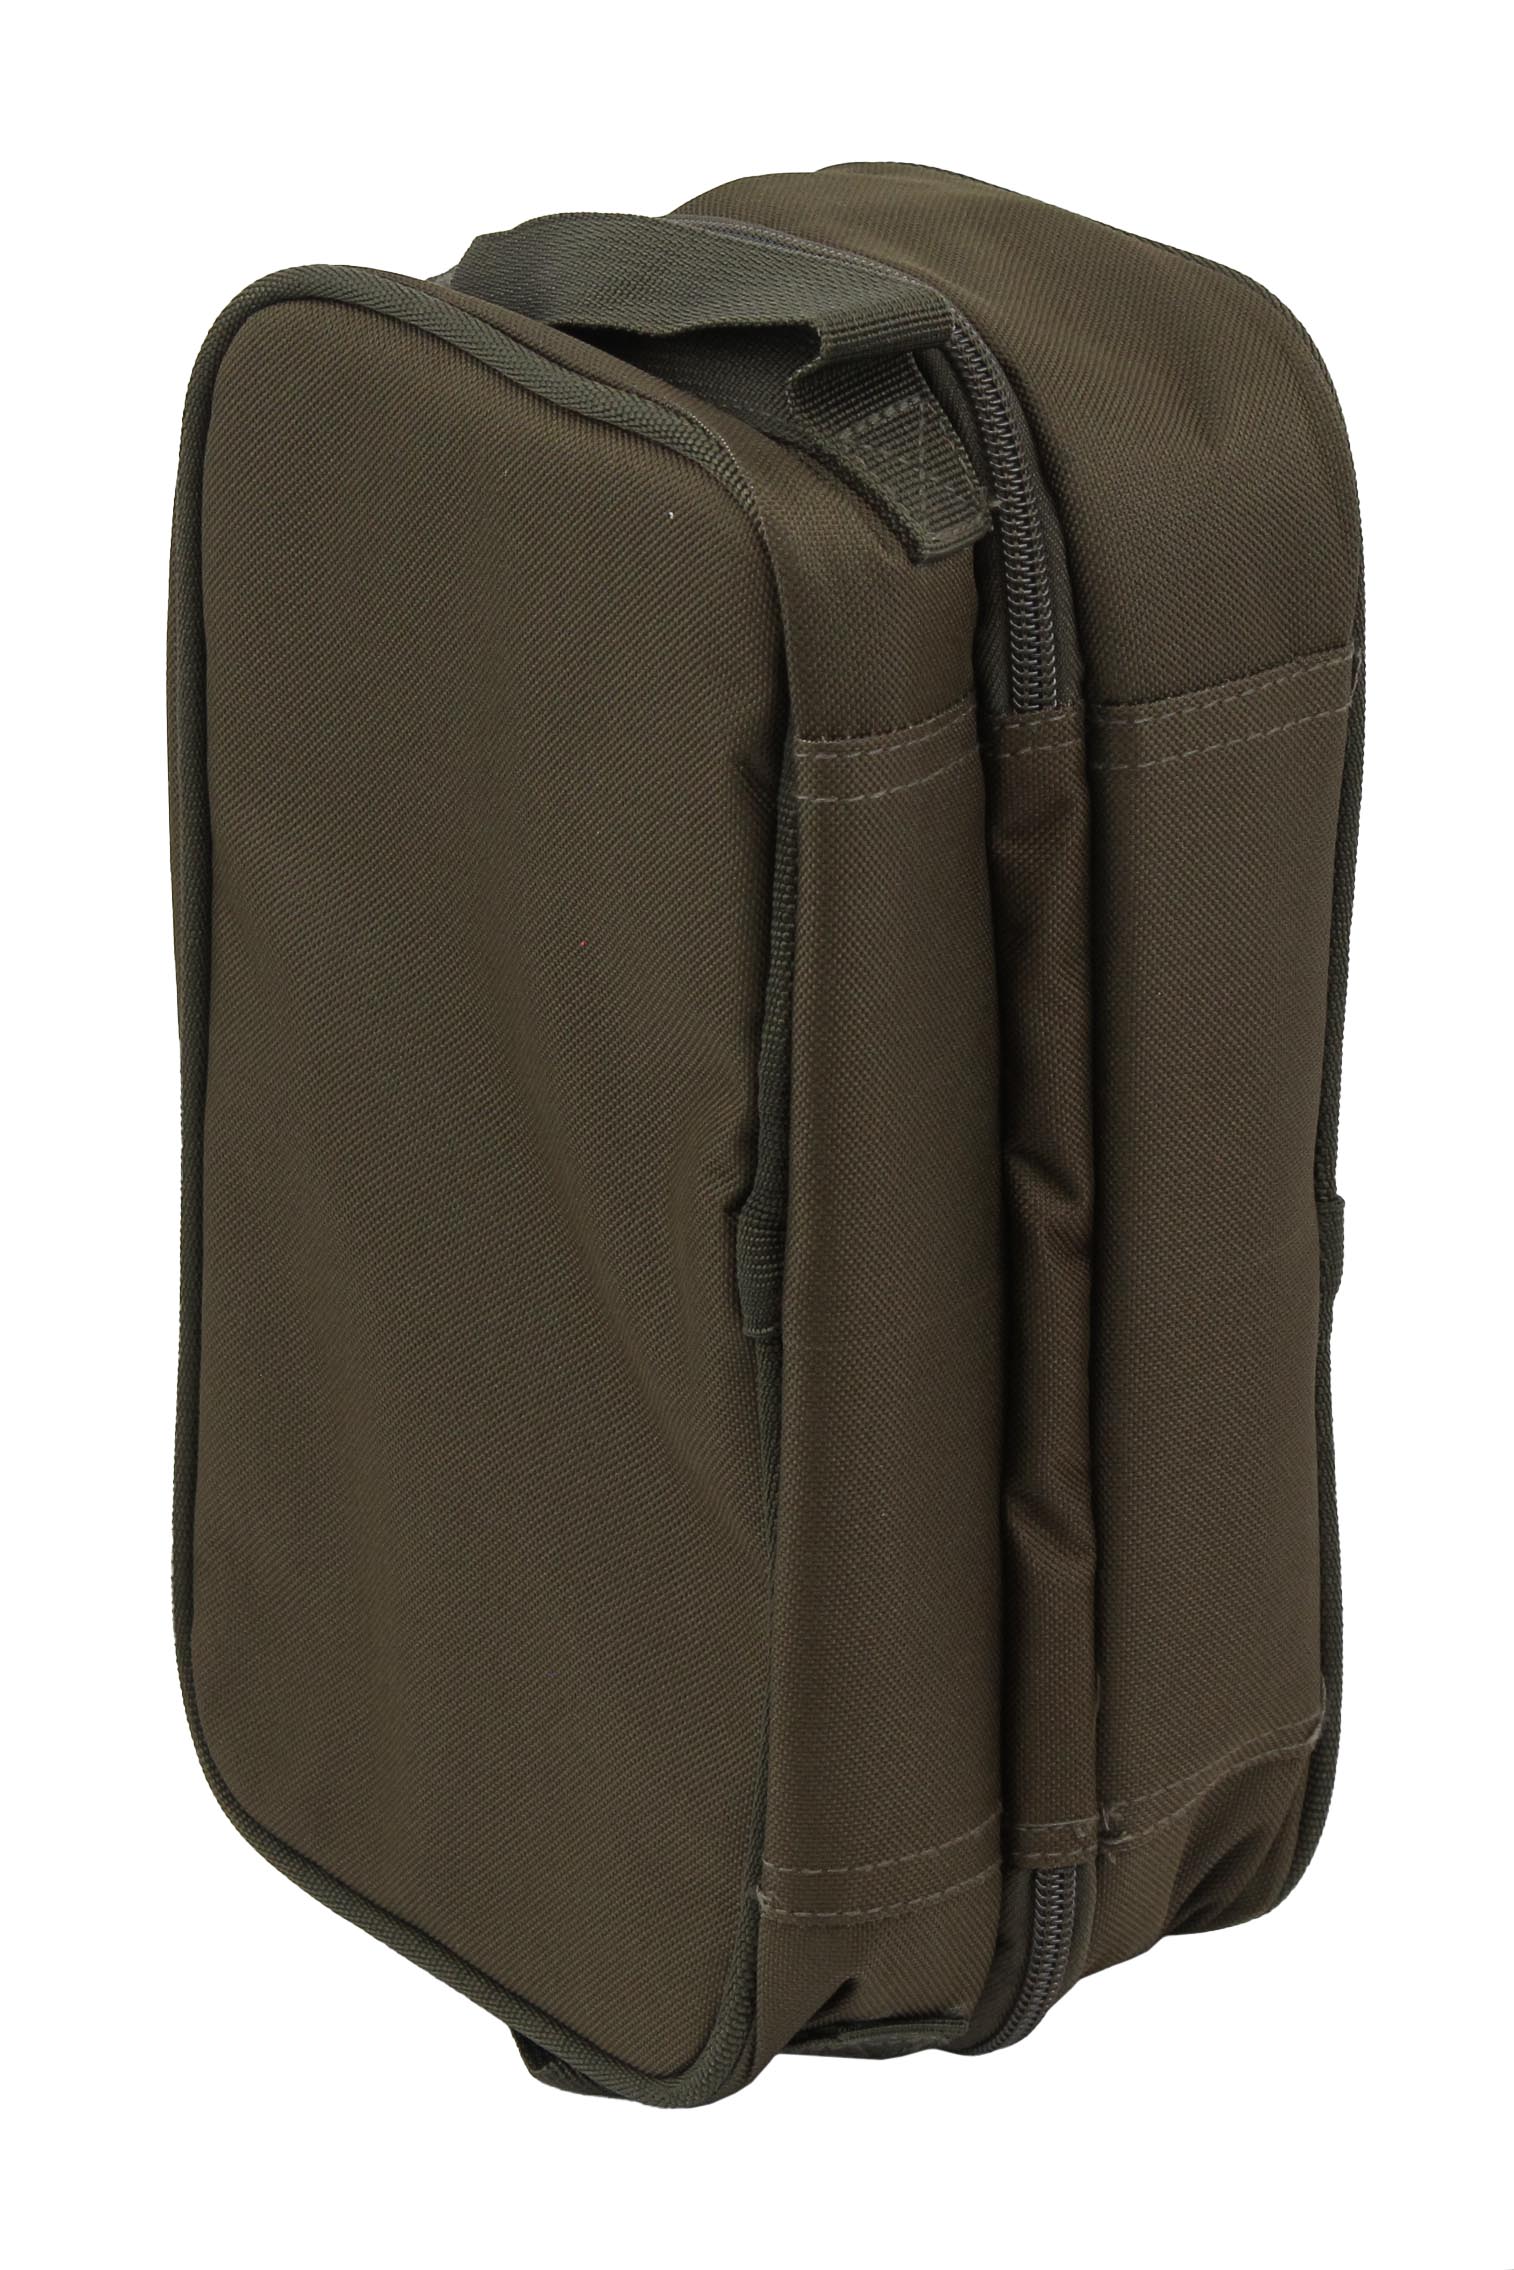 Сумки defender. Сумка JRC Defender Bait Bucket Tackle Bag. Urban Defender сумка. Defender Bag. JRC Defender sleeping Bag+Cover Combo.